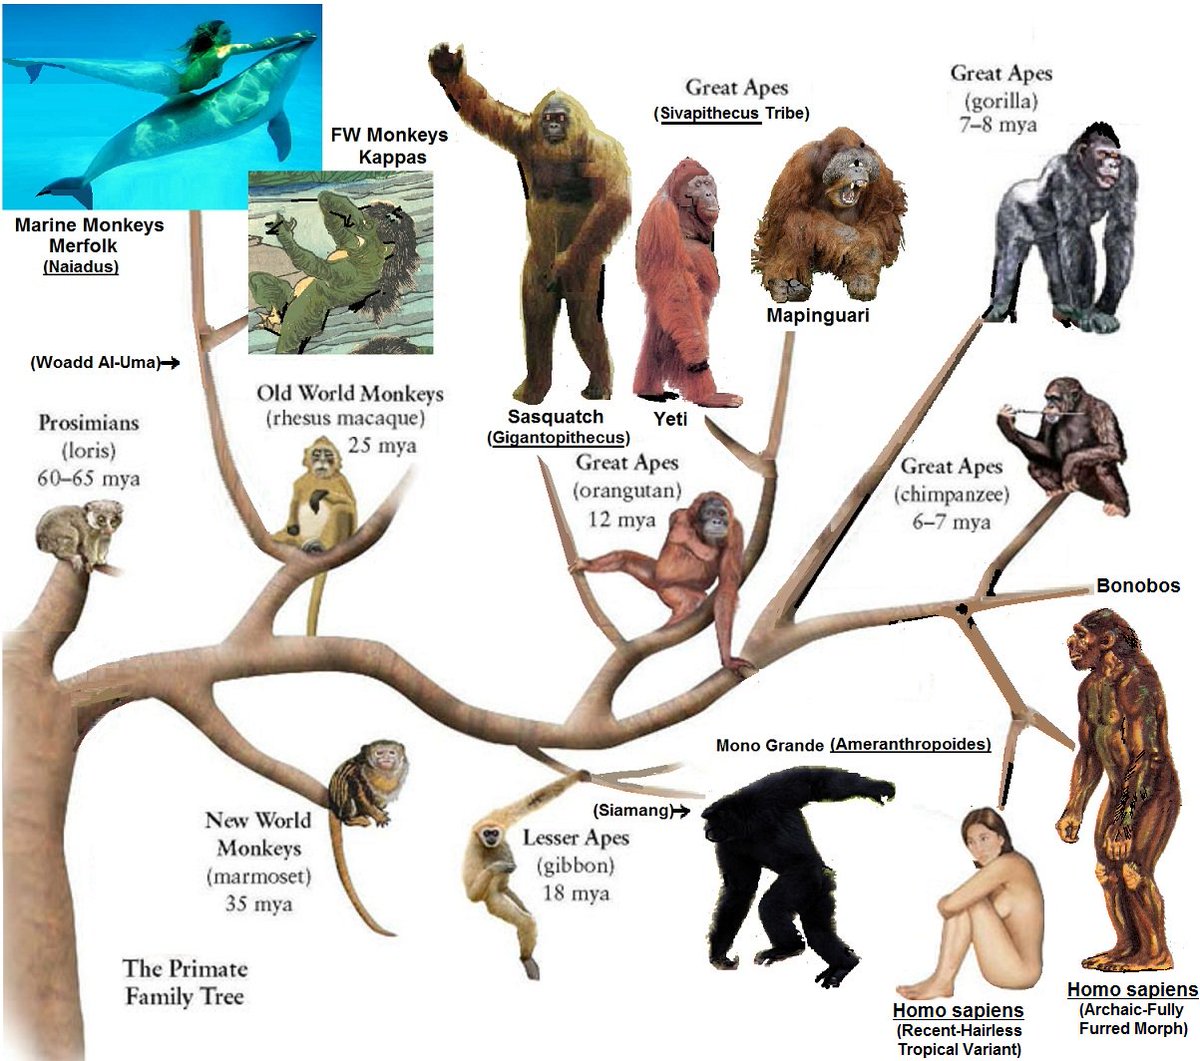 Pada zaman dahulu kita share nenek moyang yg sama dengan chimpanzee. Satu hari nenek kita ni beranak kembar, satu terus jadi chimp (genus pan), satu bermutasi jadi keturunan manusia (genus homo)